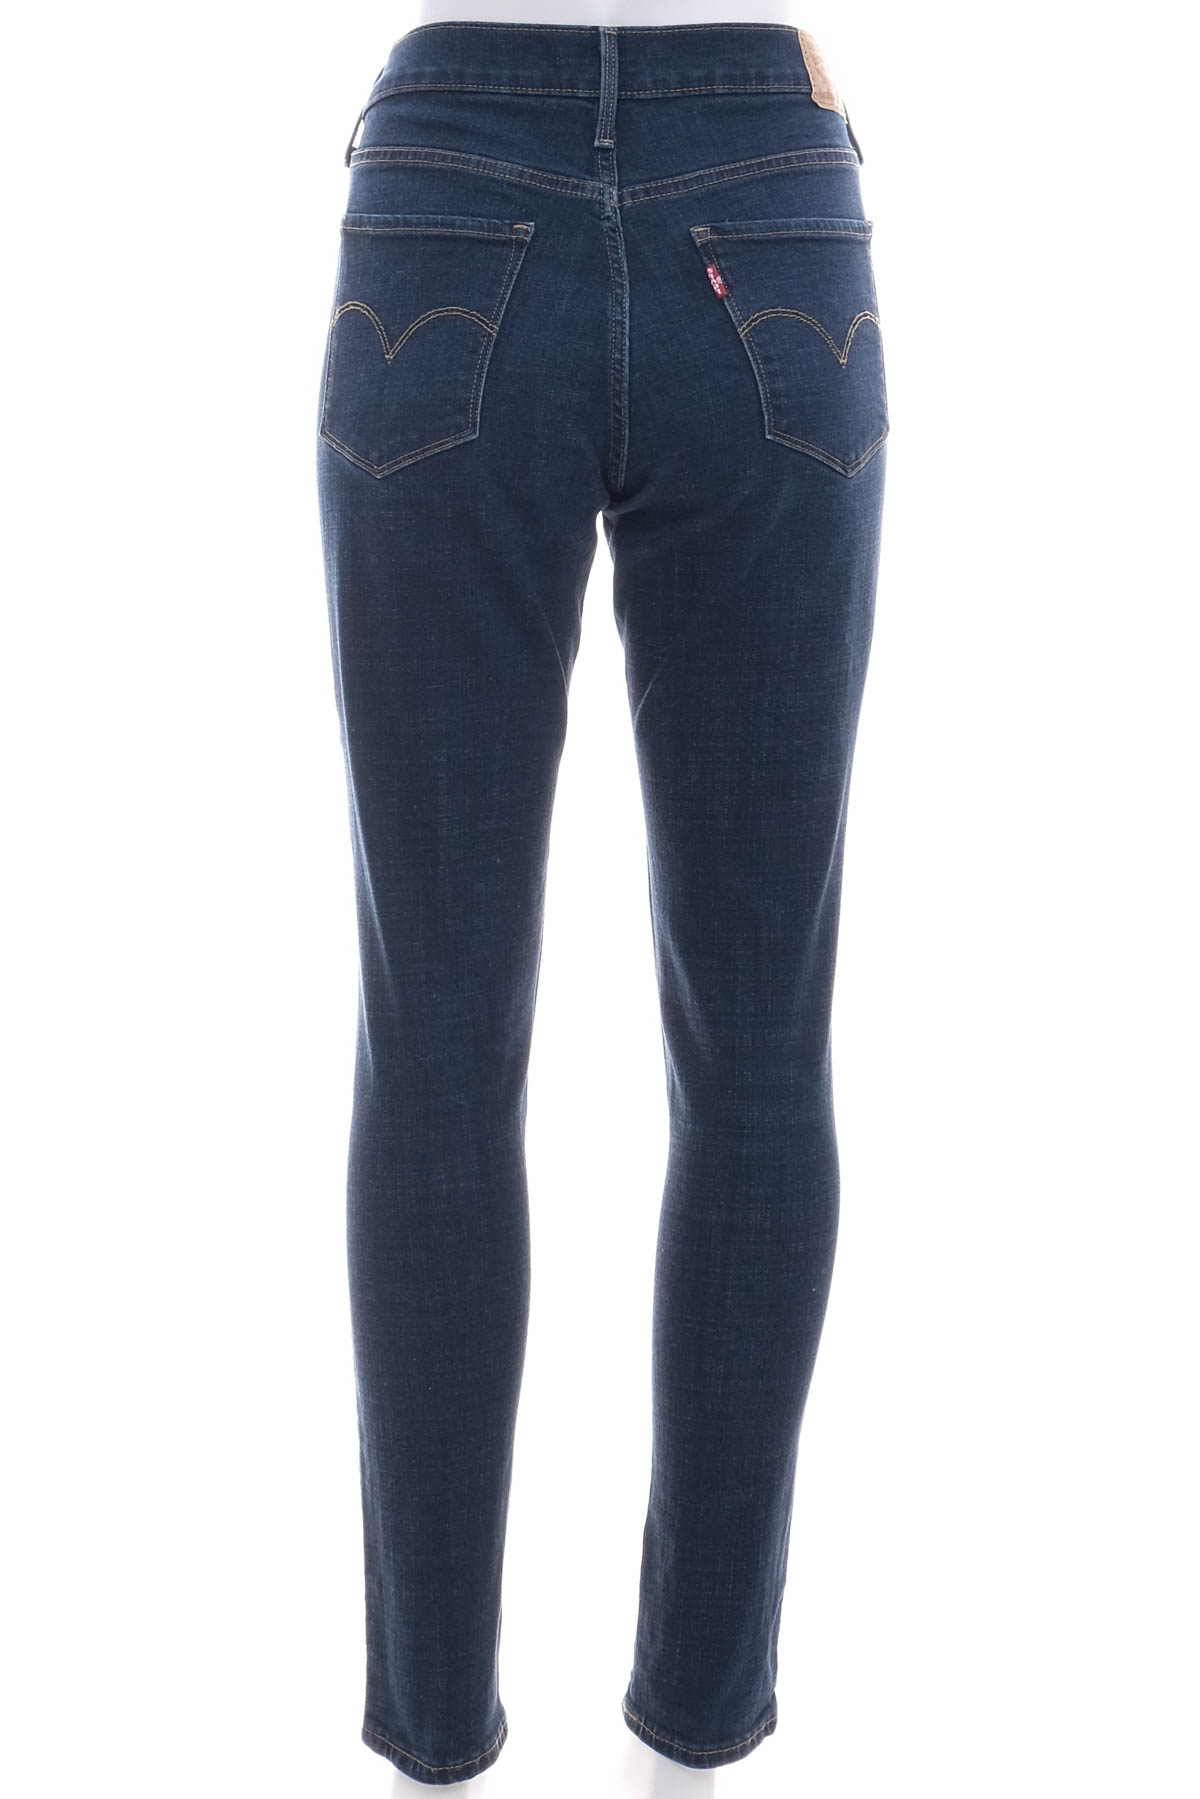 Women's jeans - Levi Strauss & Co - 1